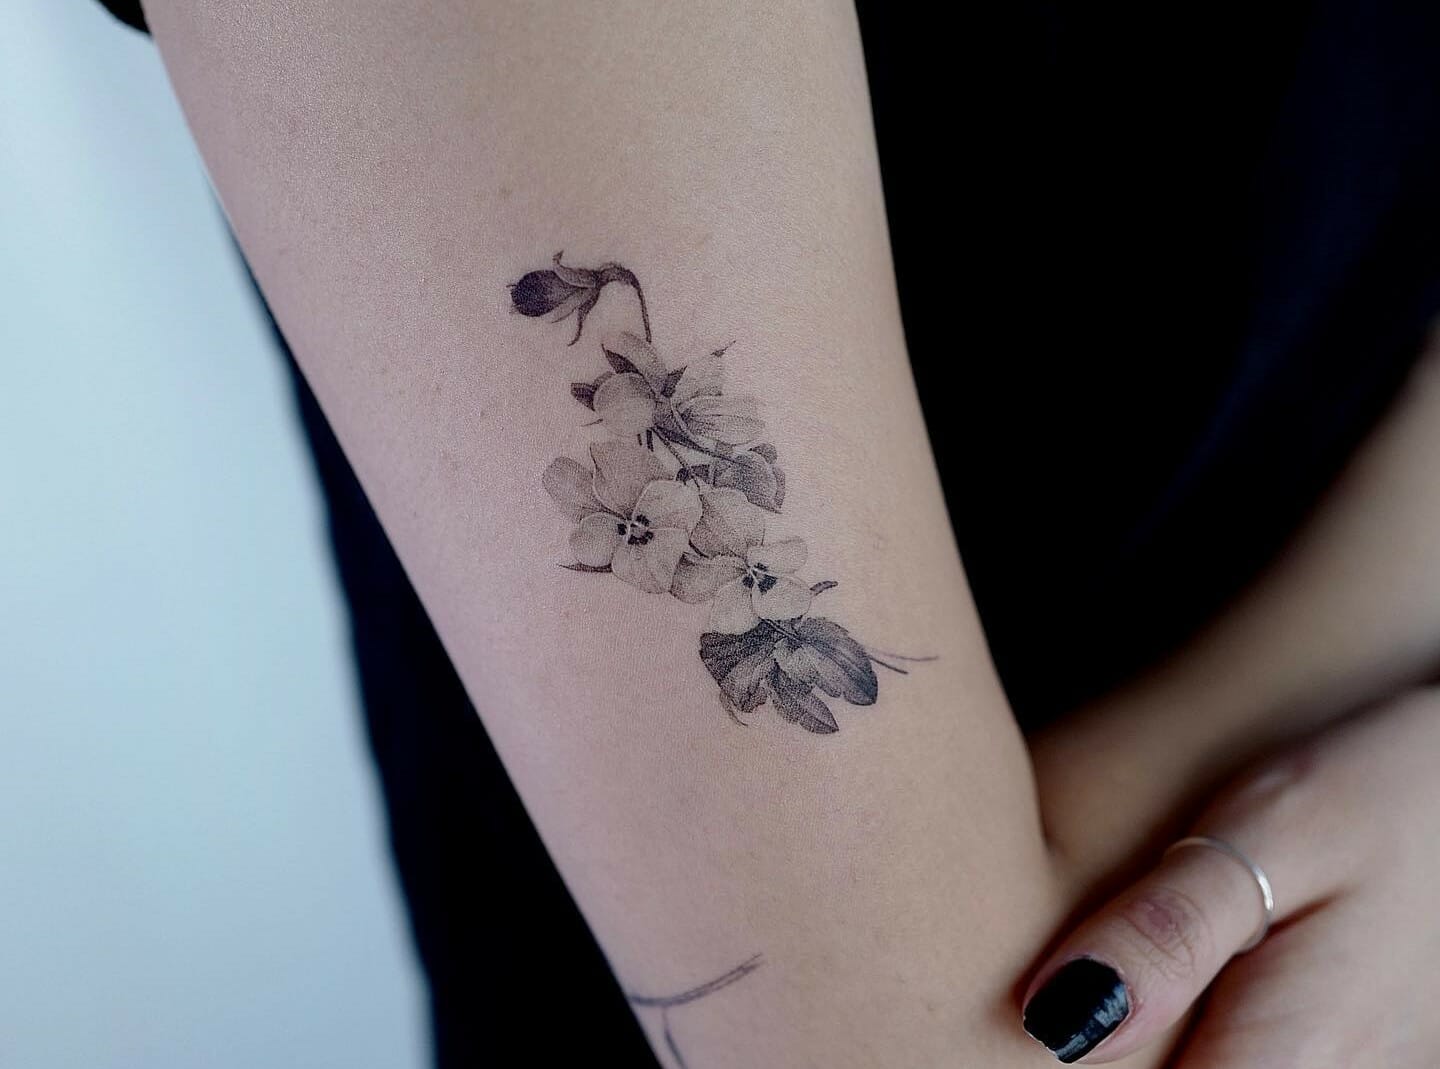 Tattoo tagged with flower pansy flower small rib tiny ifttt little  nature medium size ritkit illustrative  inkedappcom